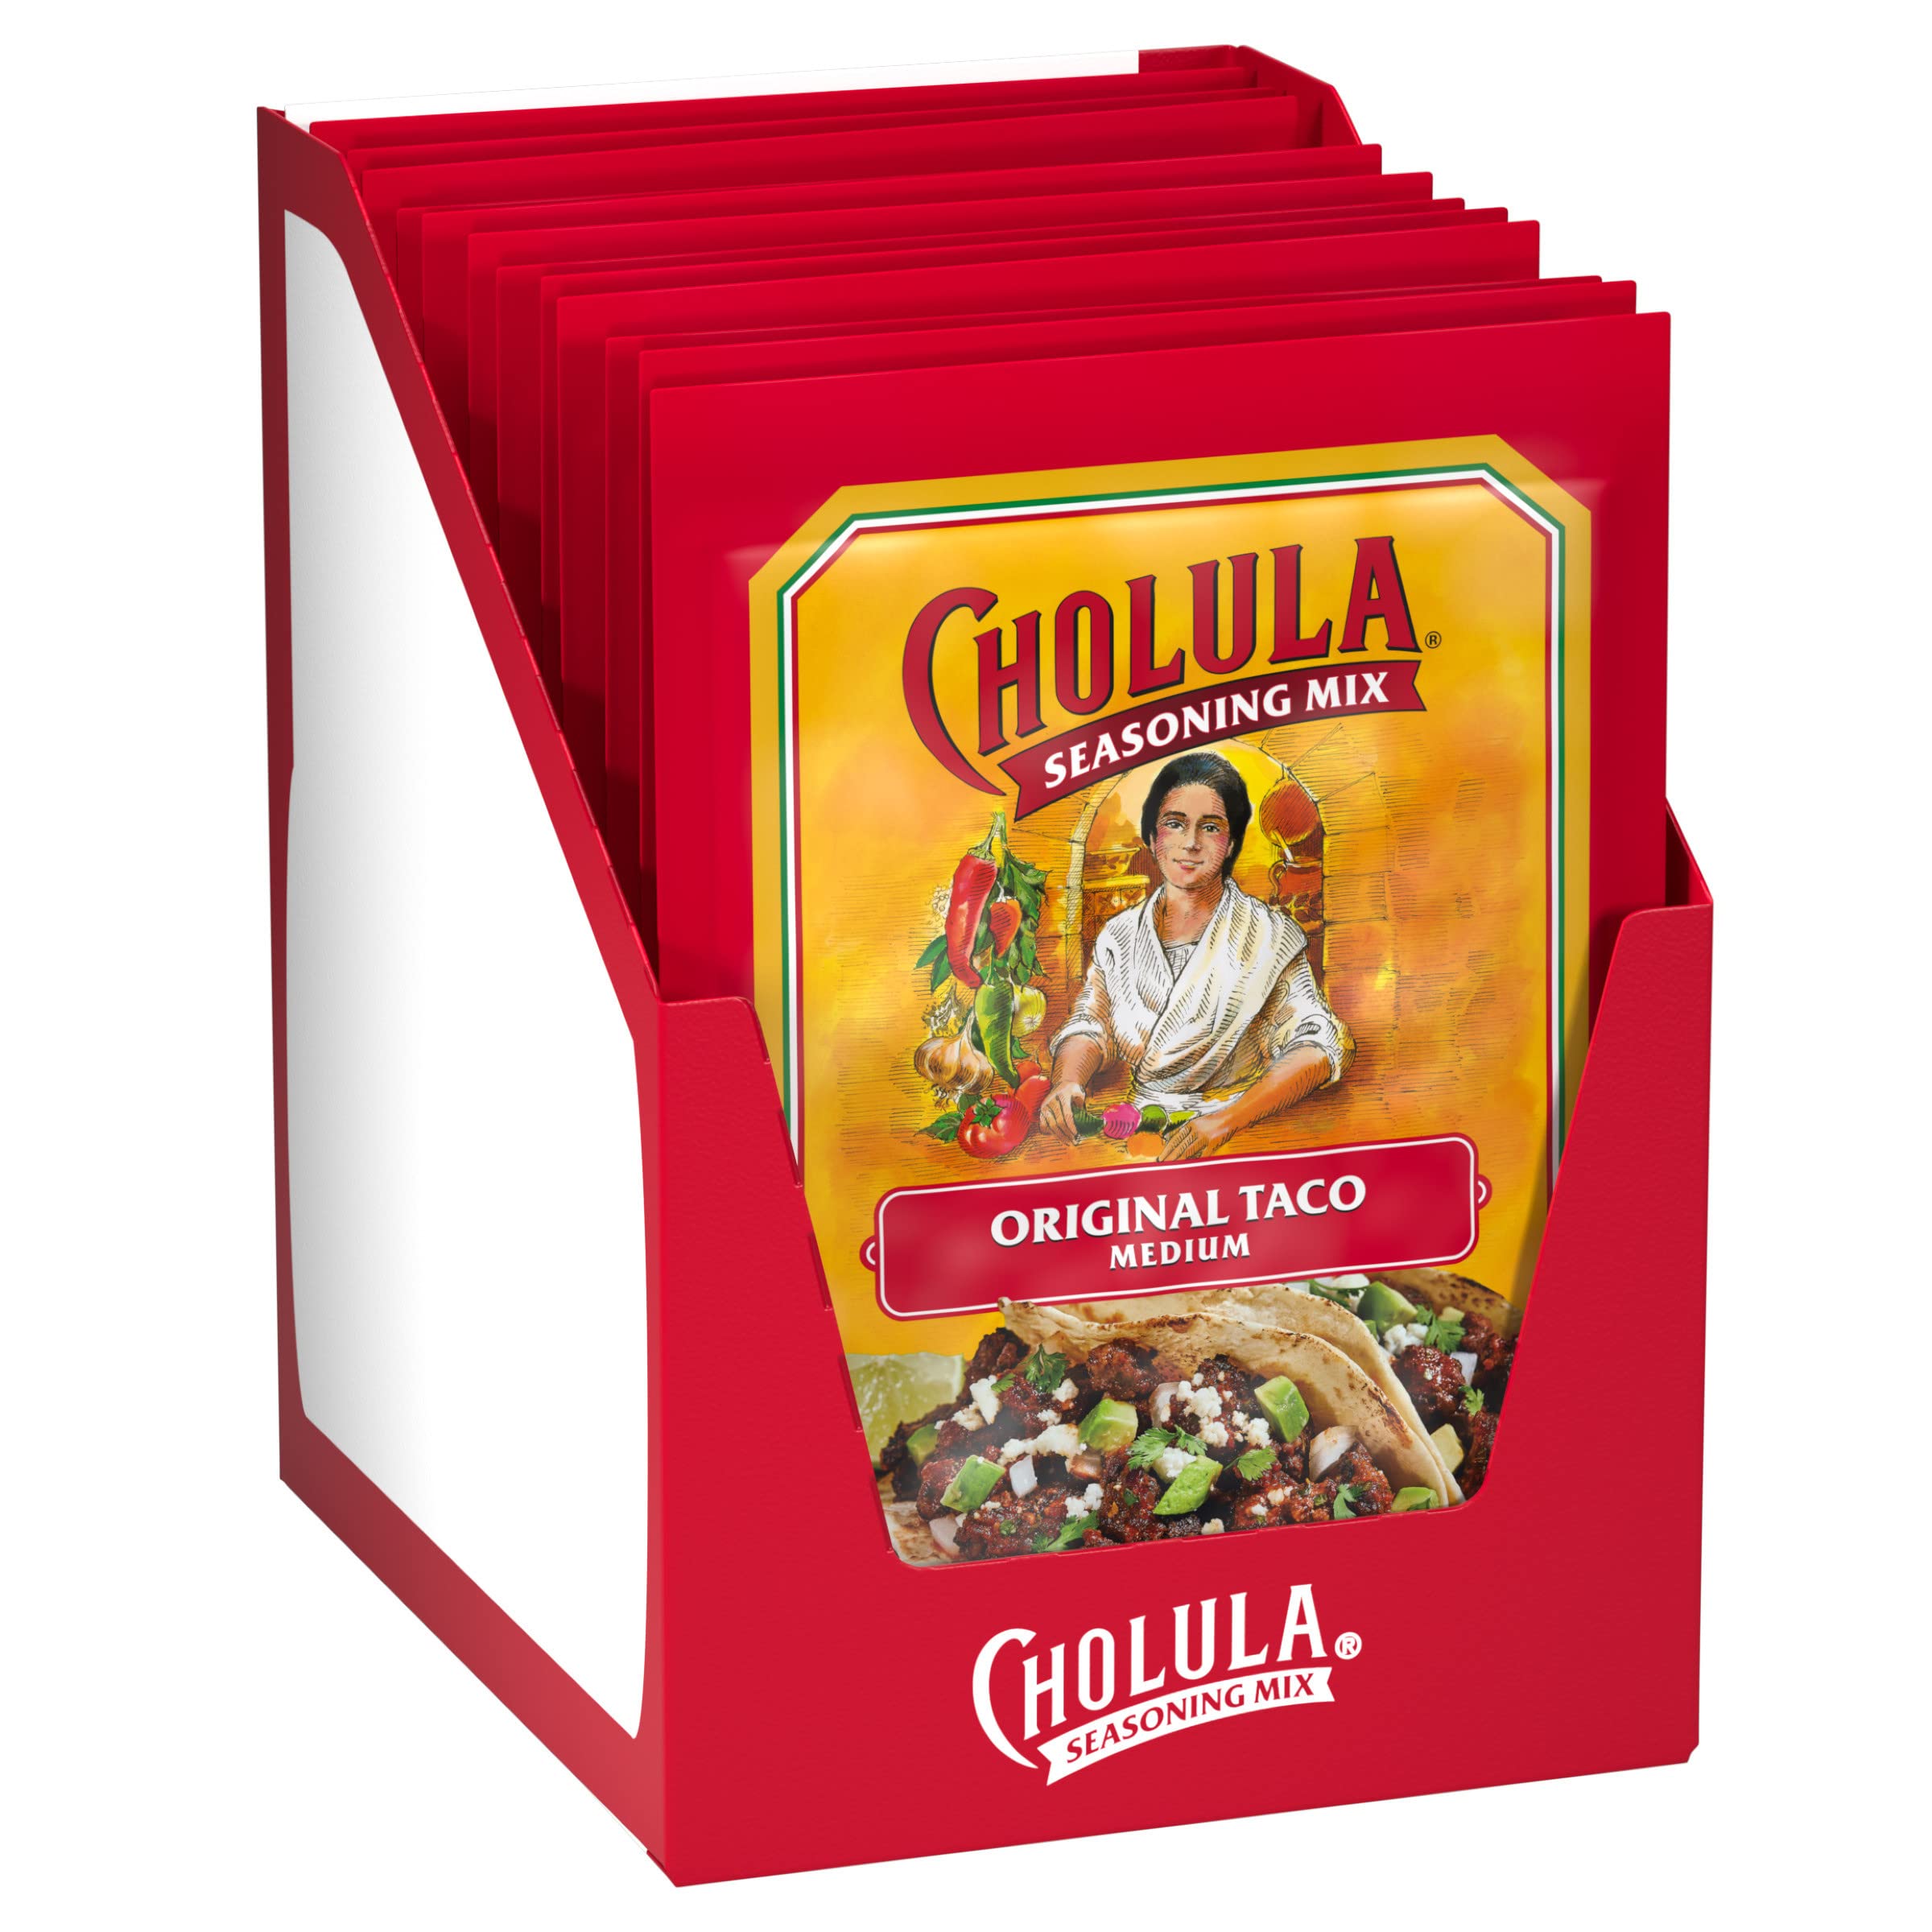 12-Count 1-Oz Cholula Original Taco Seasoning Mix (Medium) $10.80 ($0.90 each) w/ S&S + Free Shipping w/ Prime or on $35+